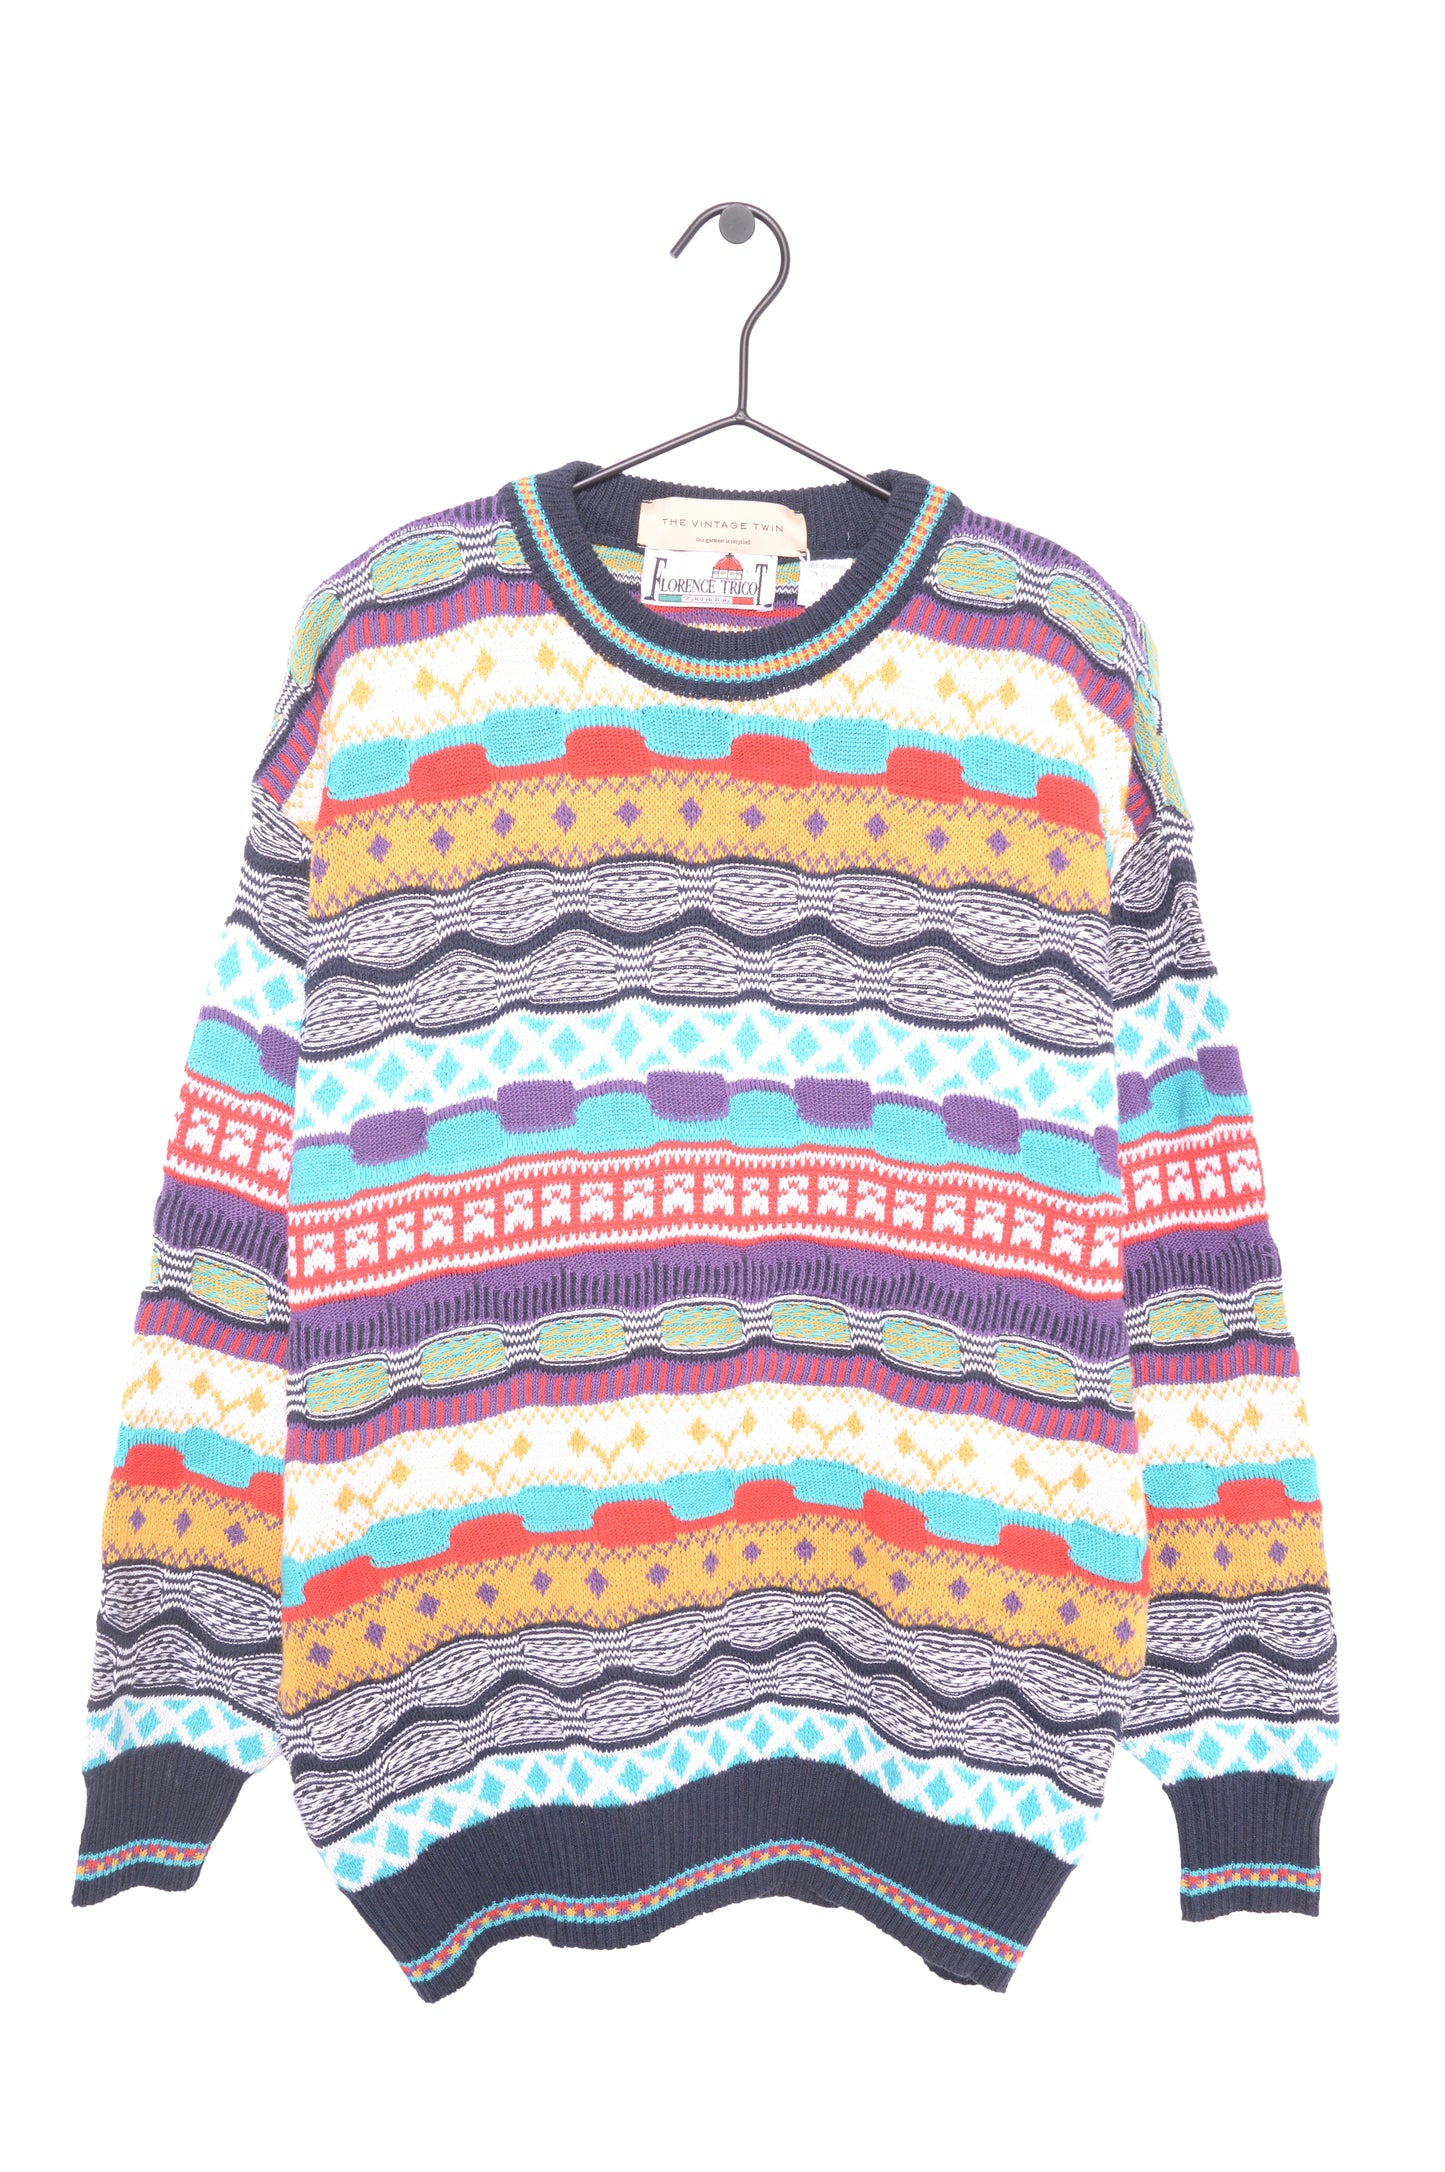 1980s Textured Sweater